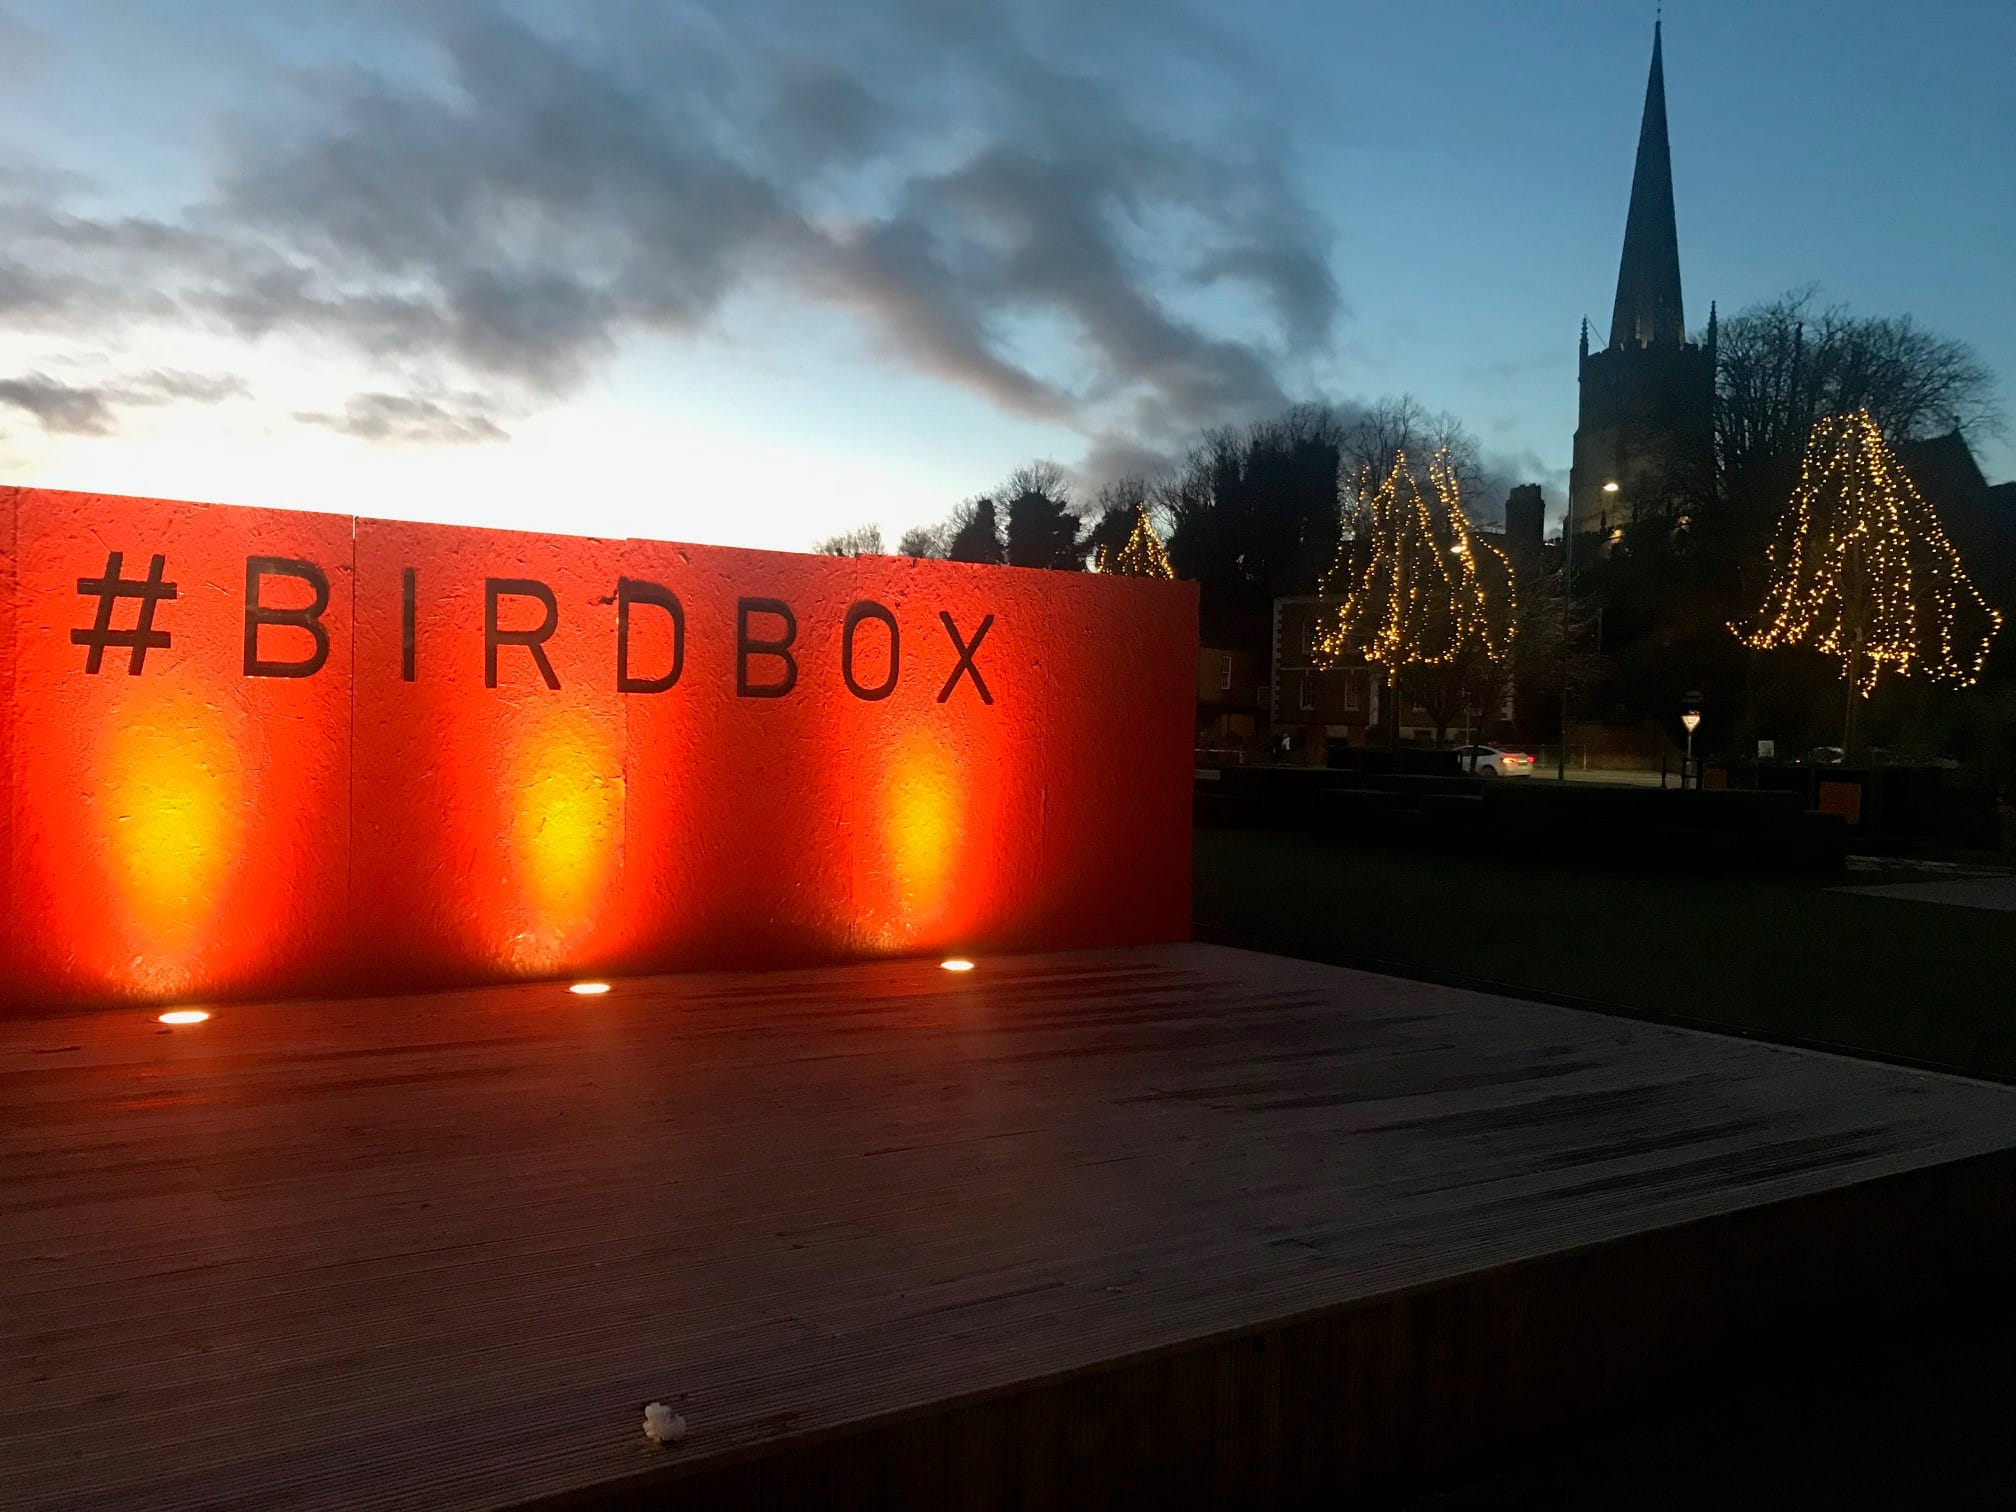 Welcome back with Bromsgrove BirdBox